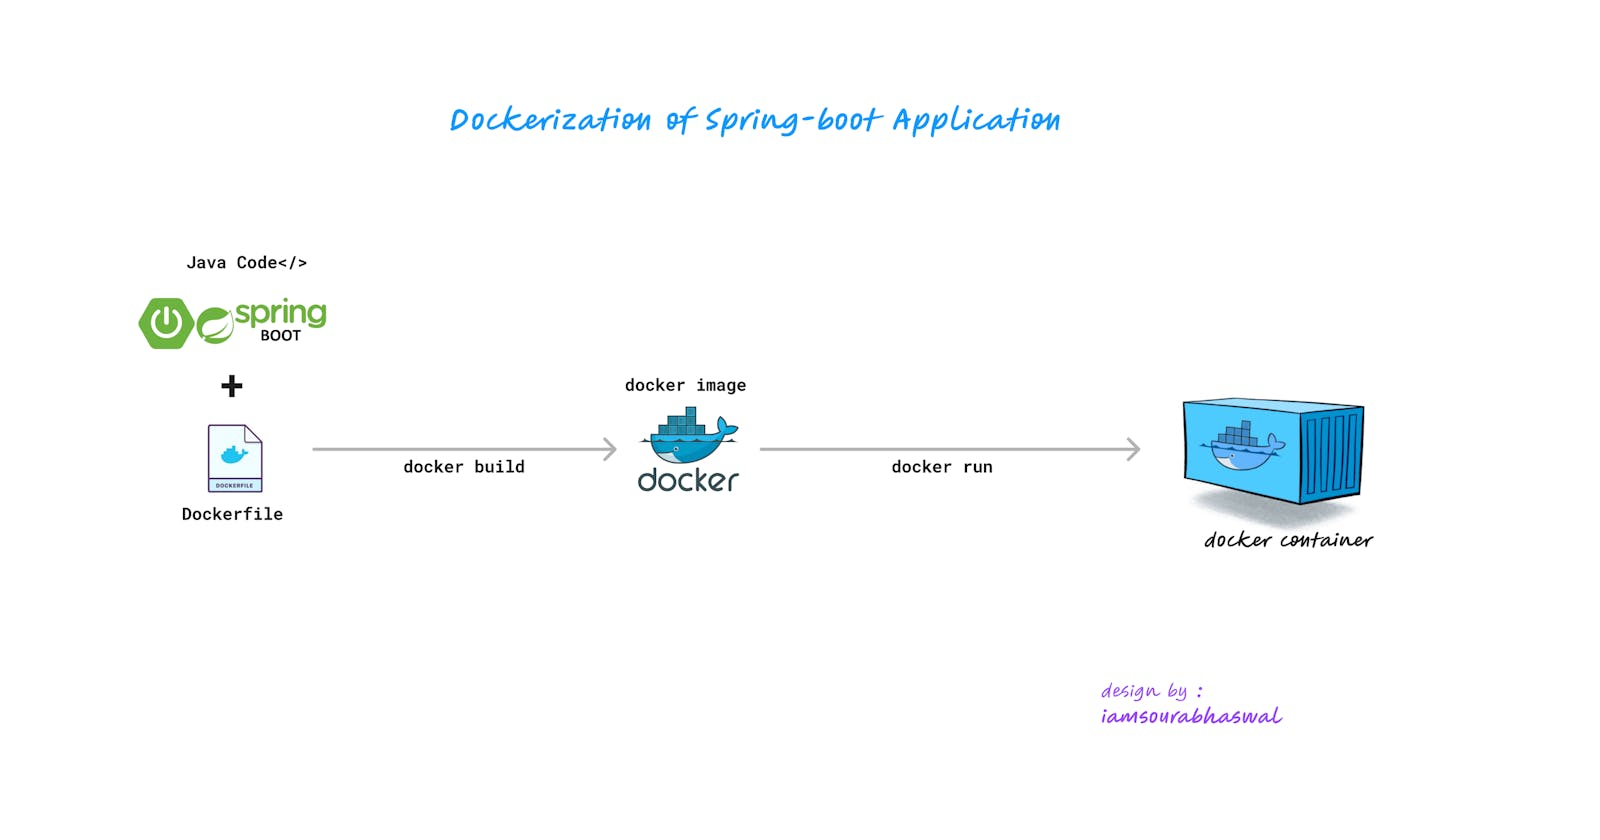 Dockerization Spring-boot Application